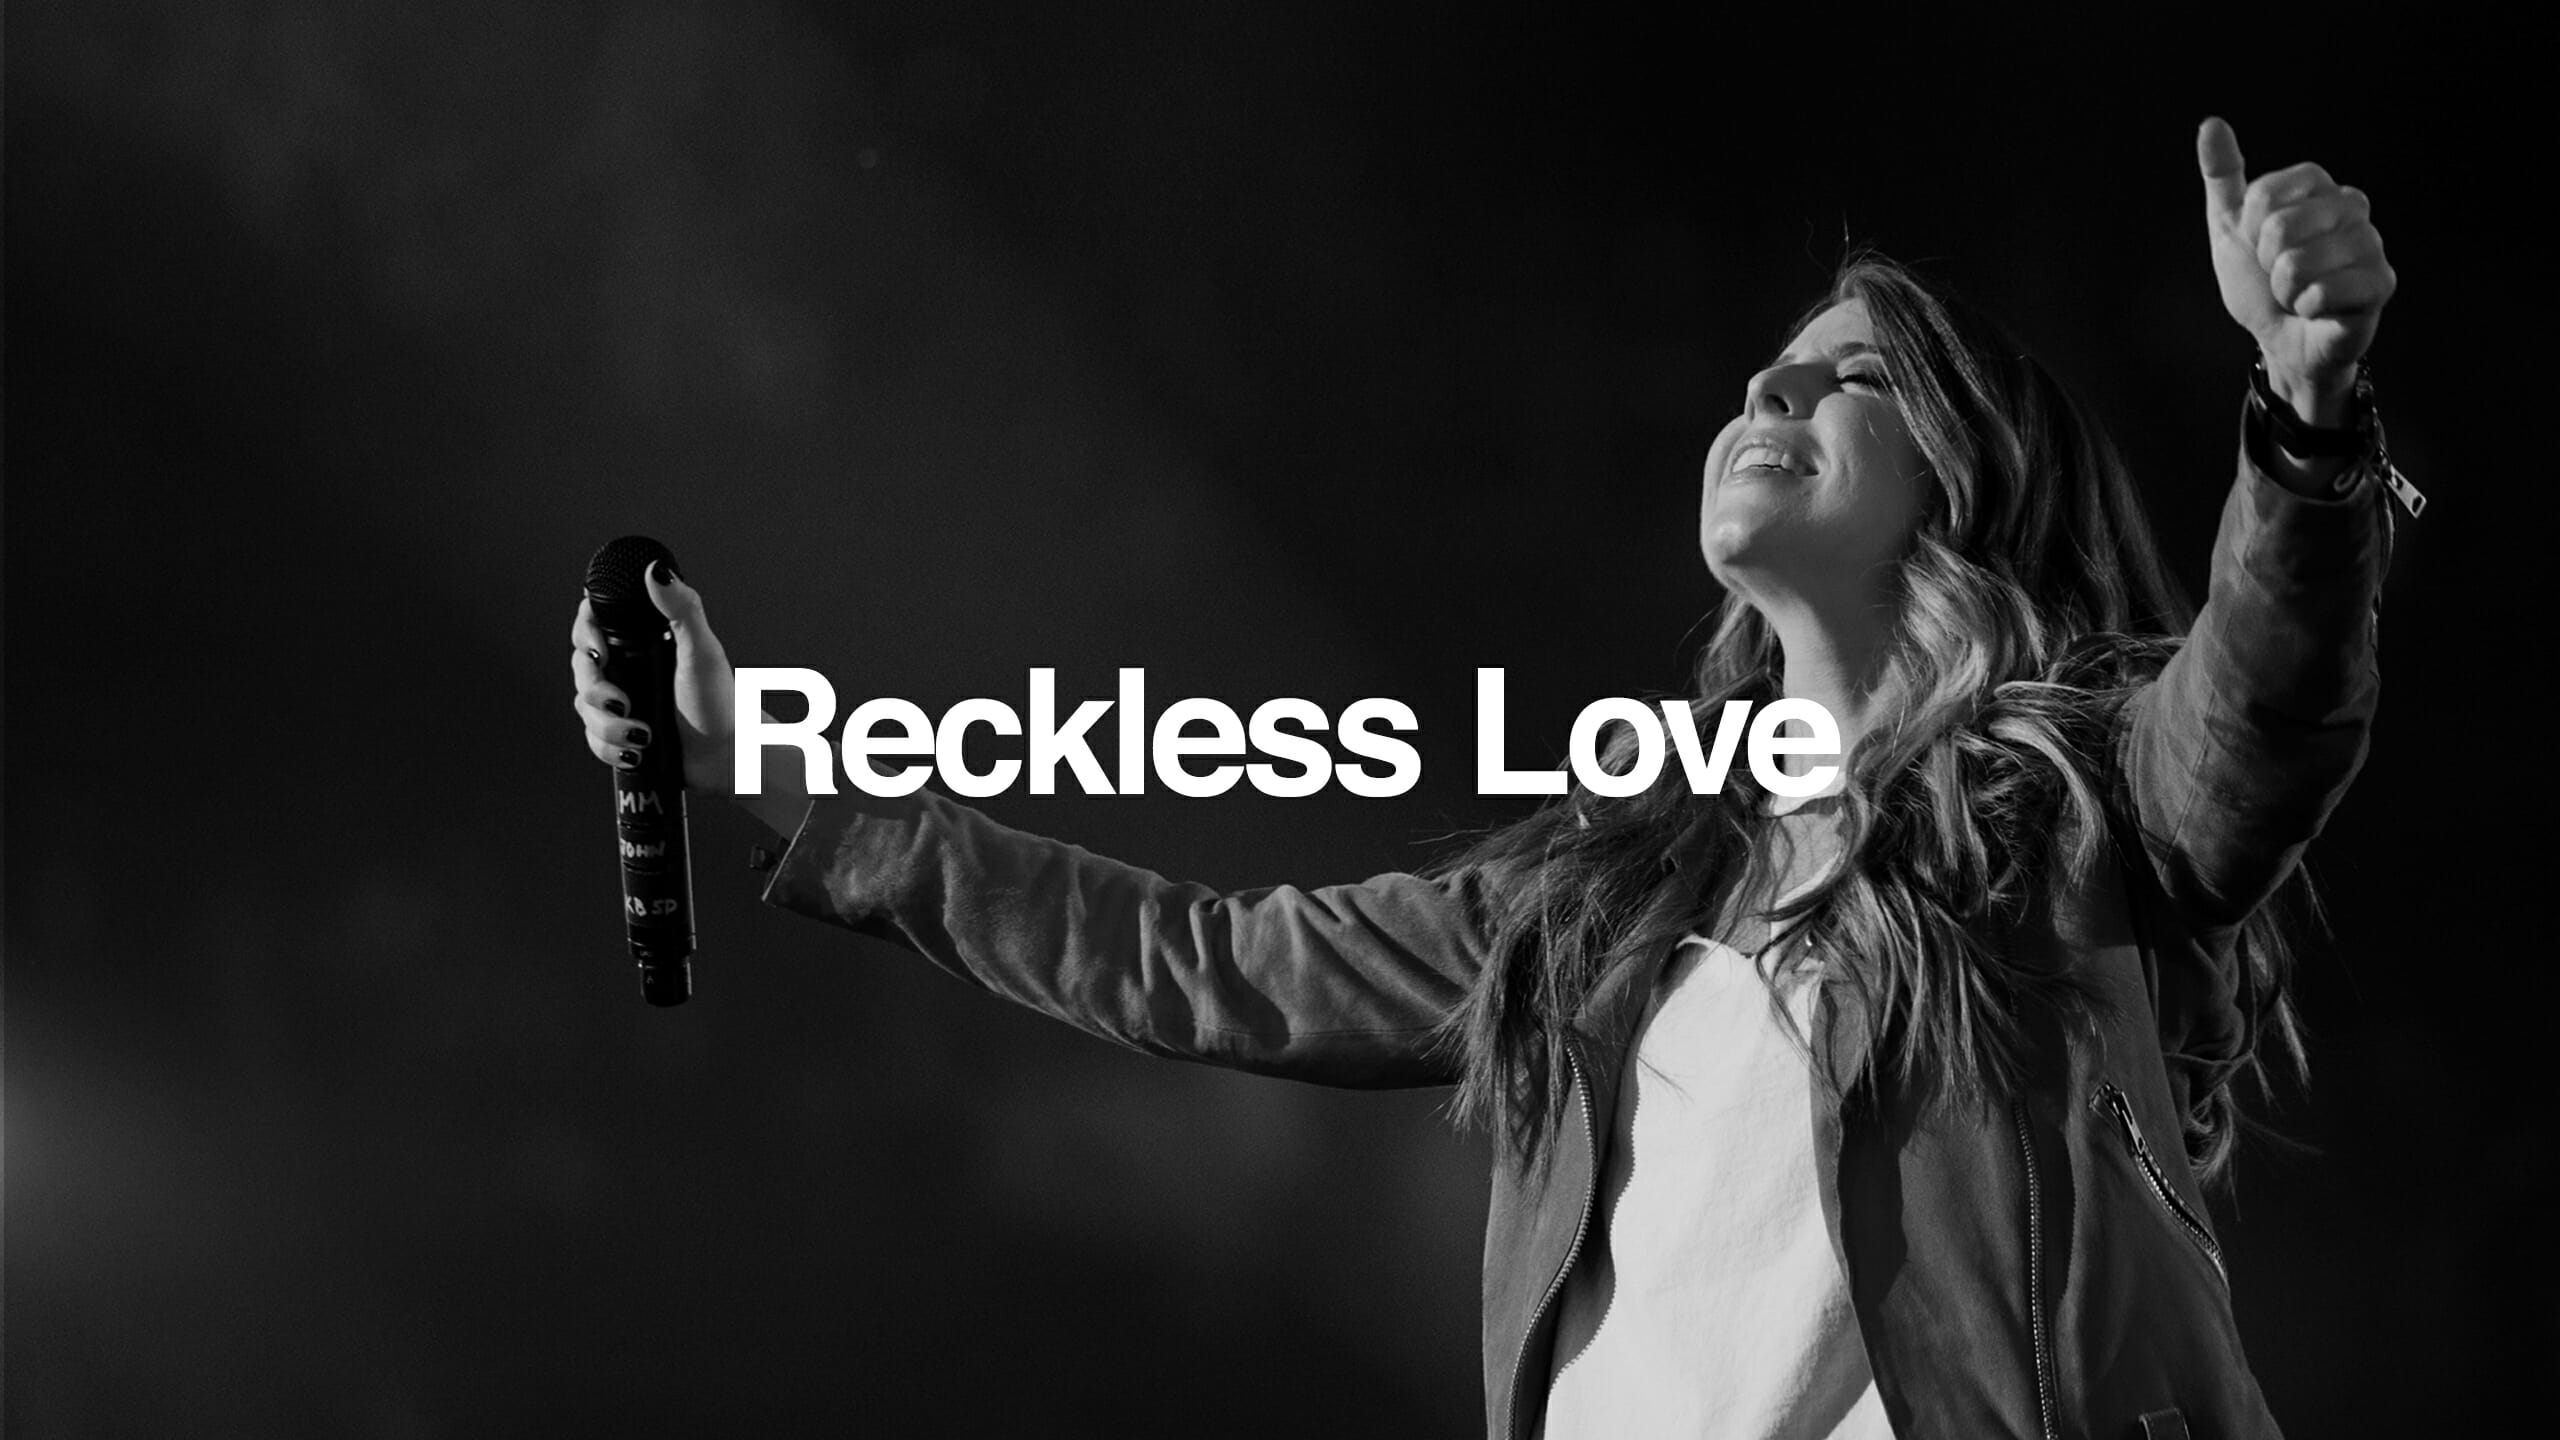 Reckless love lyrics